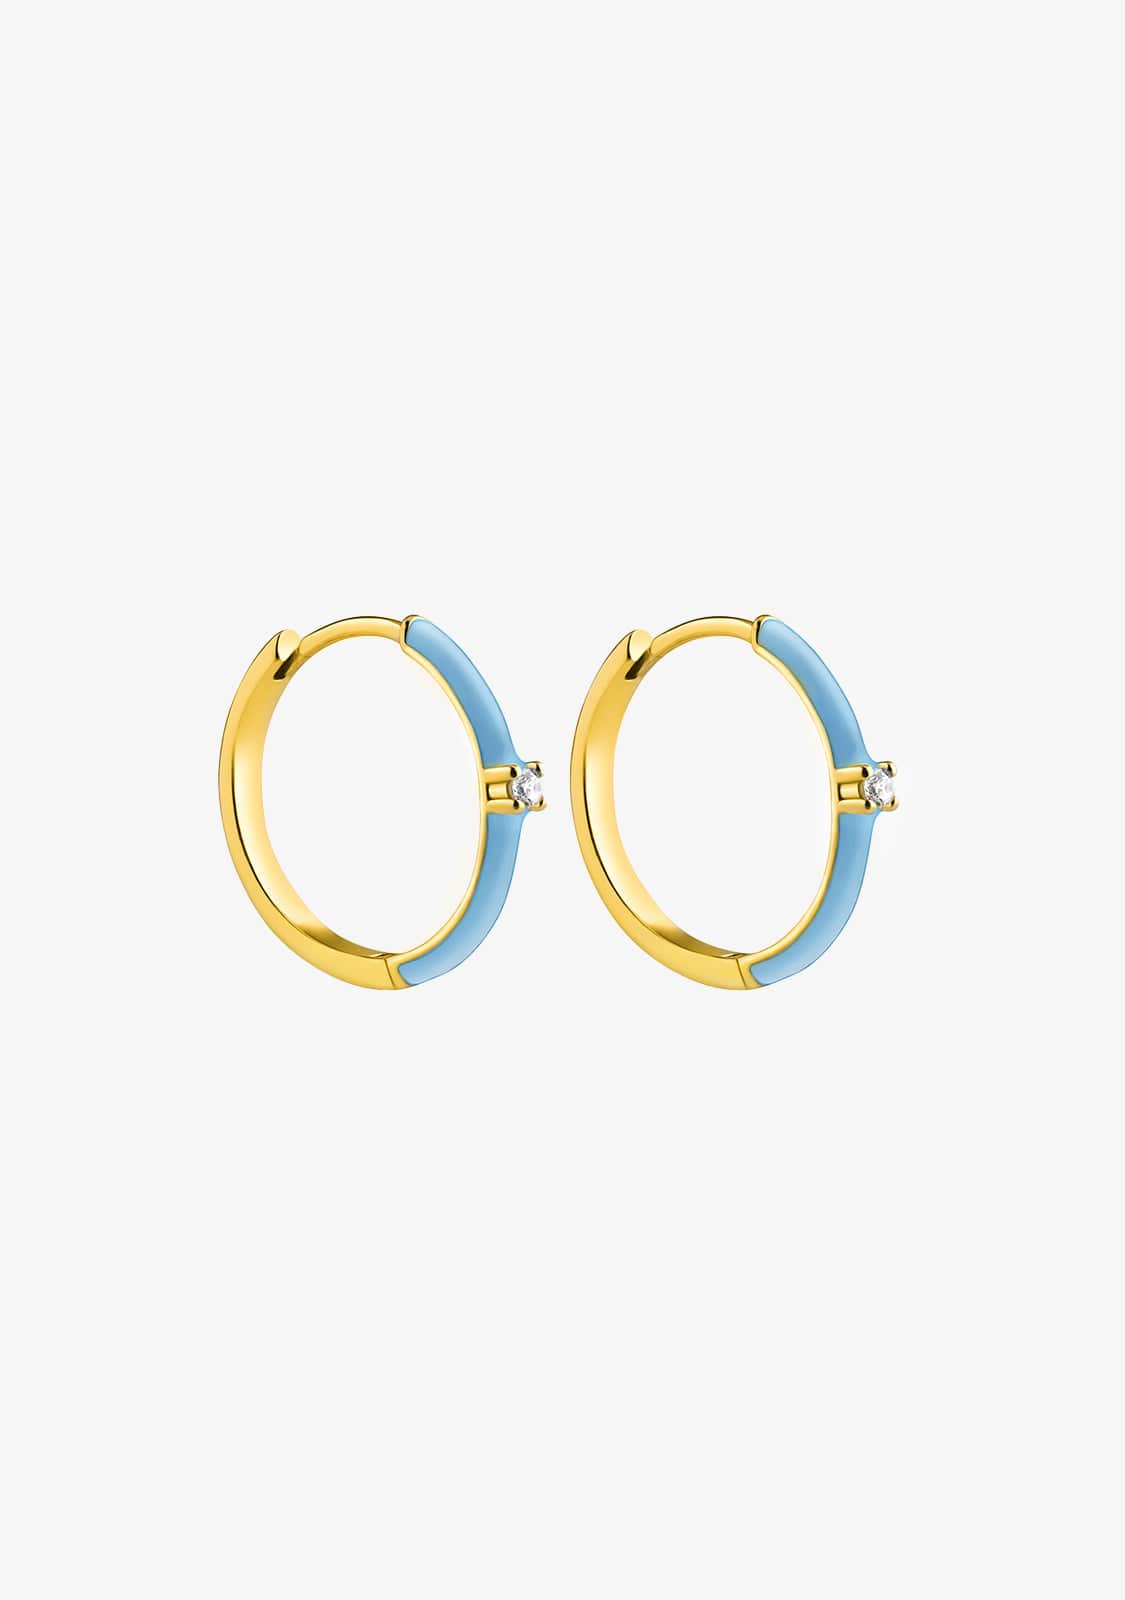 Light Blue Hoop Earrings Gold